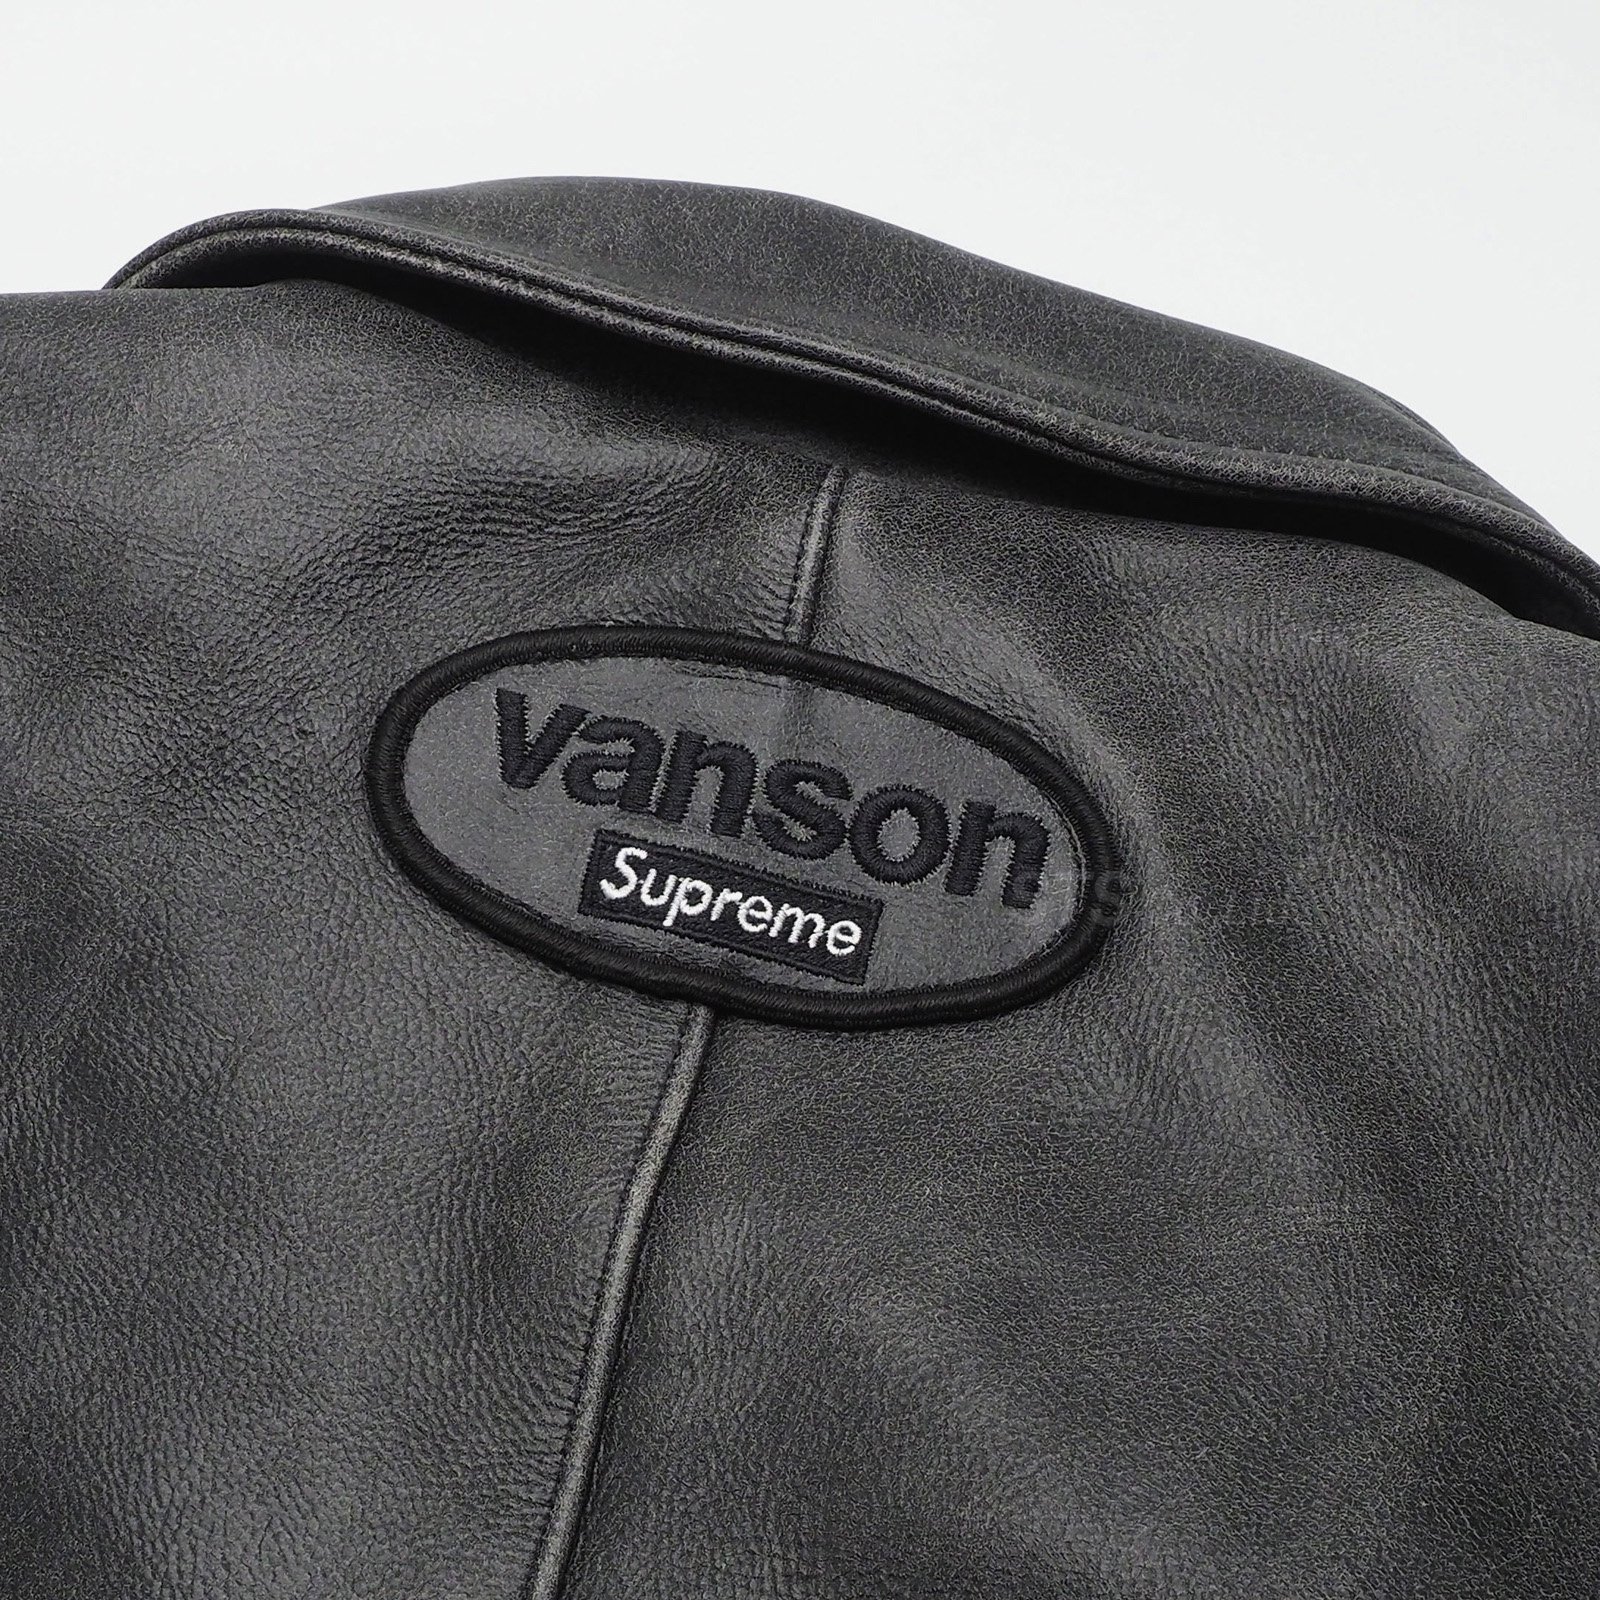 T-ポイント5倍】 Supreme×Vanson Worn Leather Jacket 黒S sushitai.com.mx